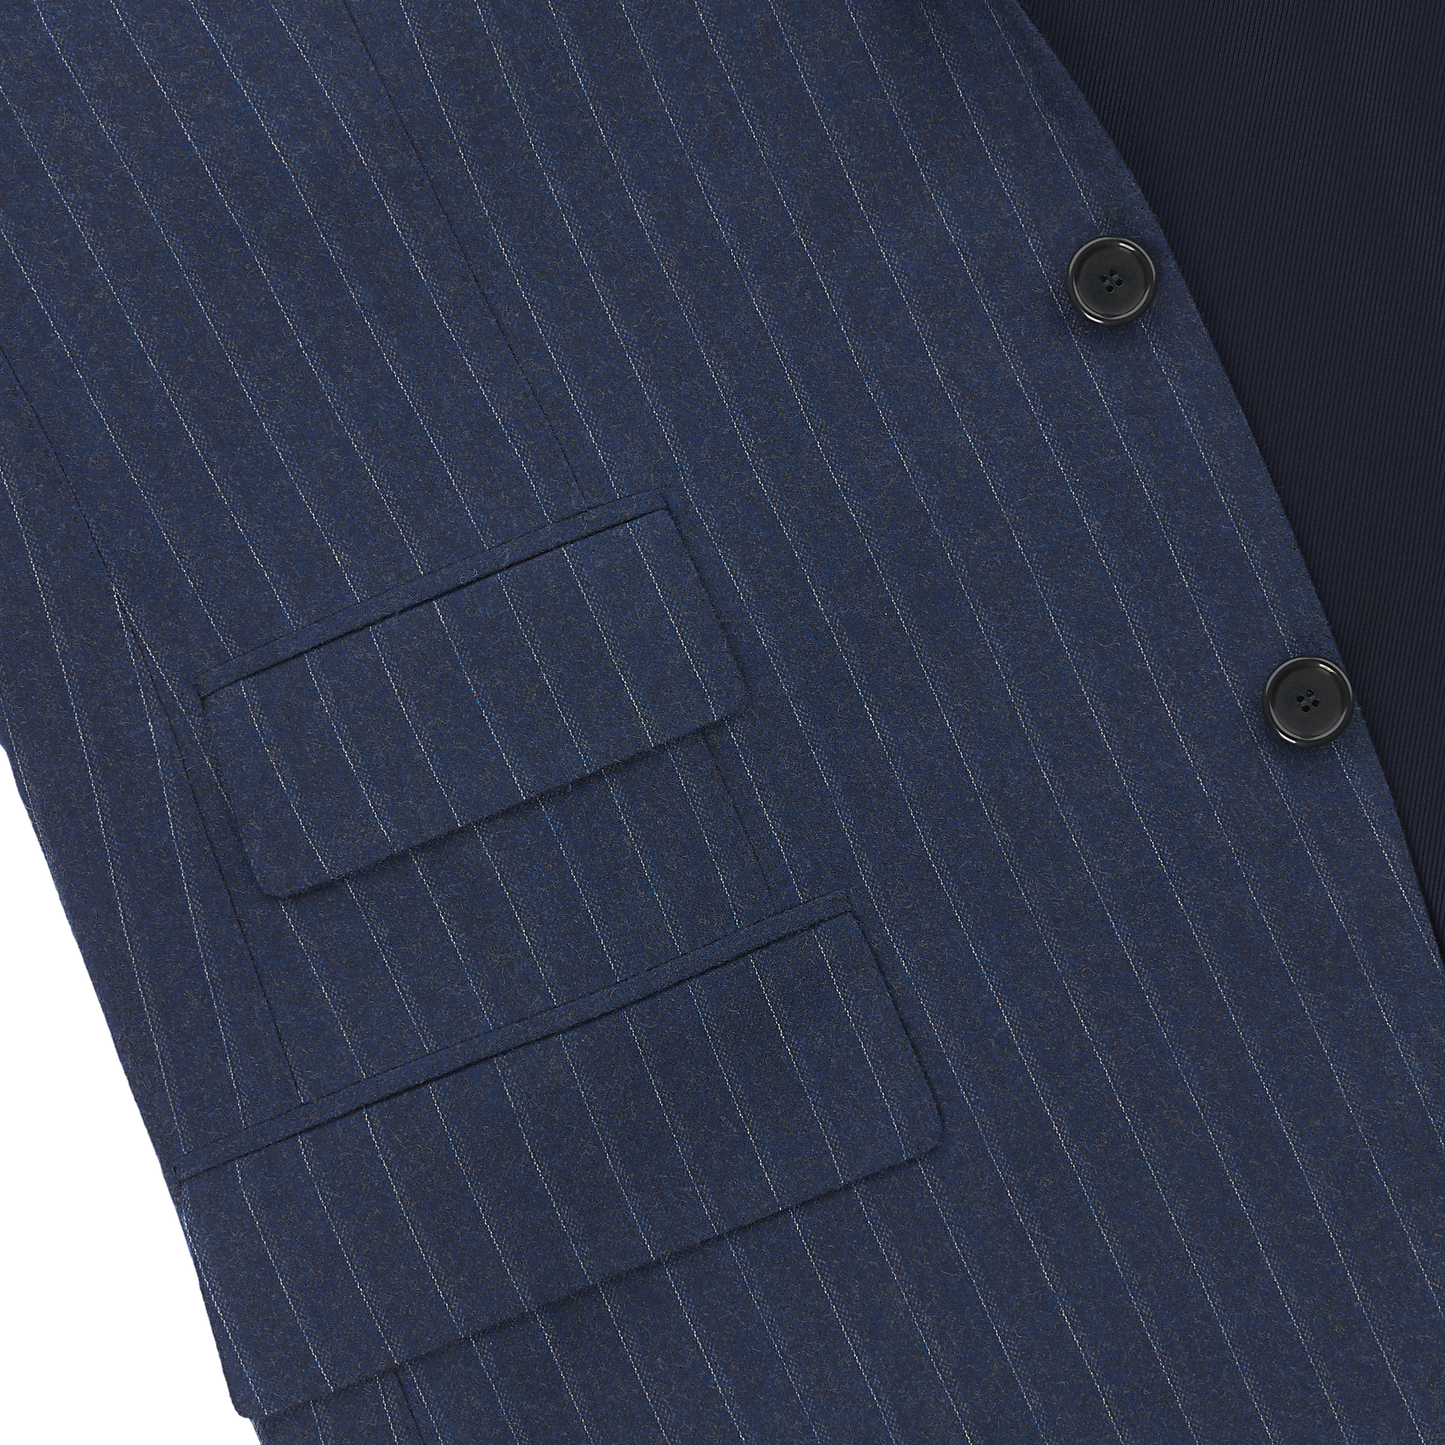 Cesare Attolini Single-Breasted Striped Wool Suit in Dark Blue - SARTALE